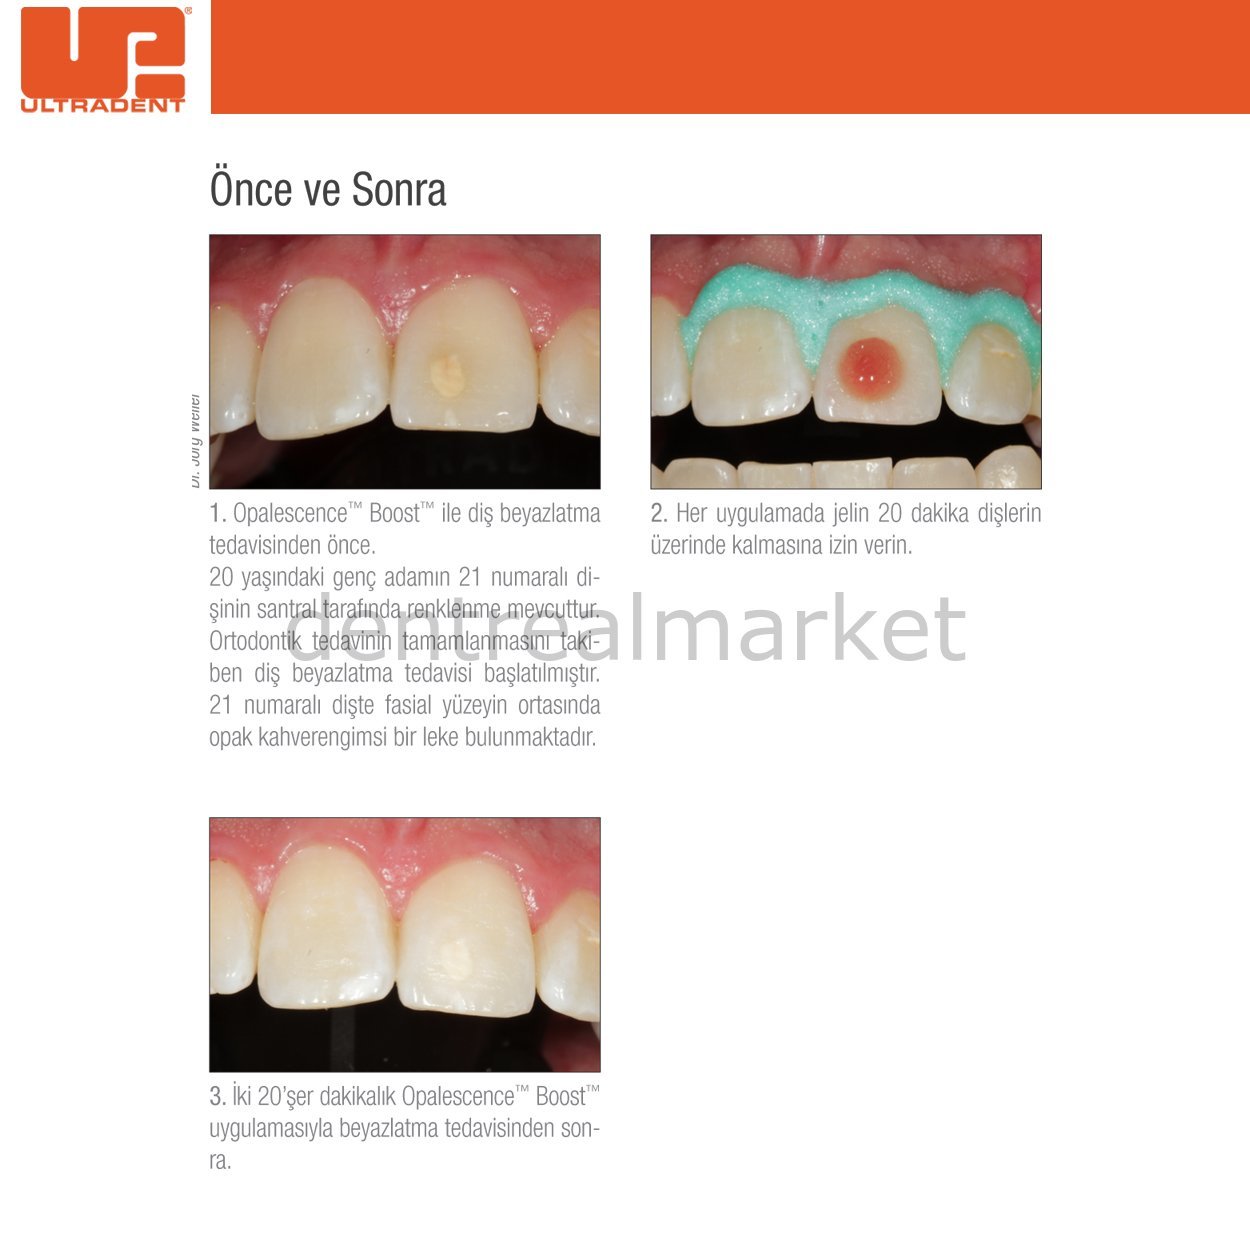 DentrealStore - Ultradent Ultradent Opalescence Boost PF%40HP - in Office Dental Whitening - 5 Patient Kits